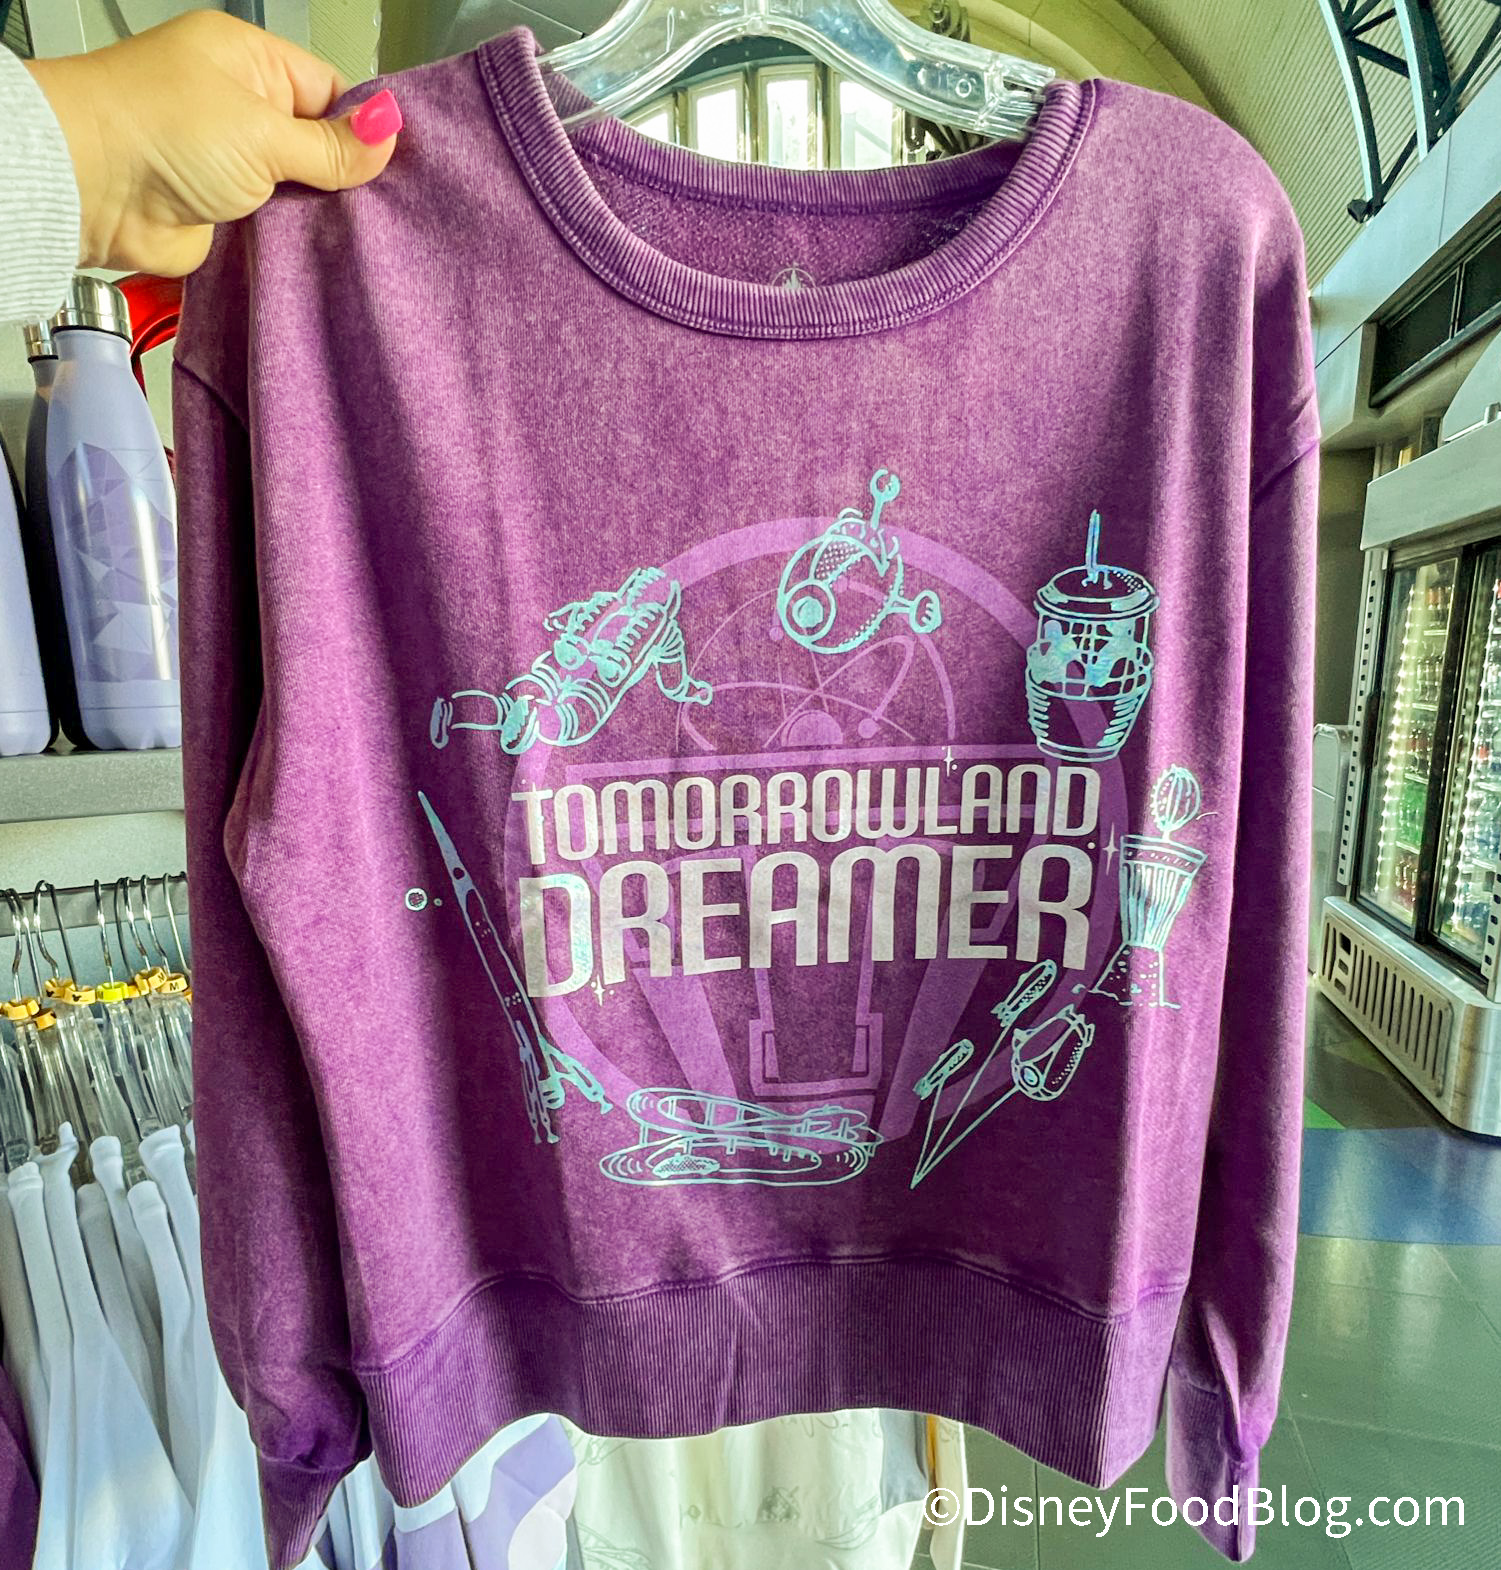 PHOTOS: New Tomorrowland Purple Wall Long-Sleeved Shirt and